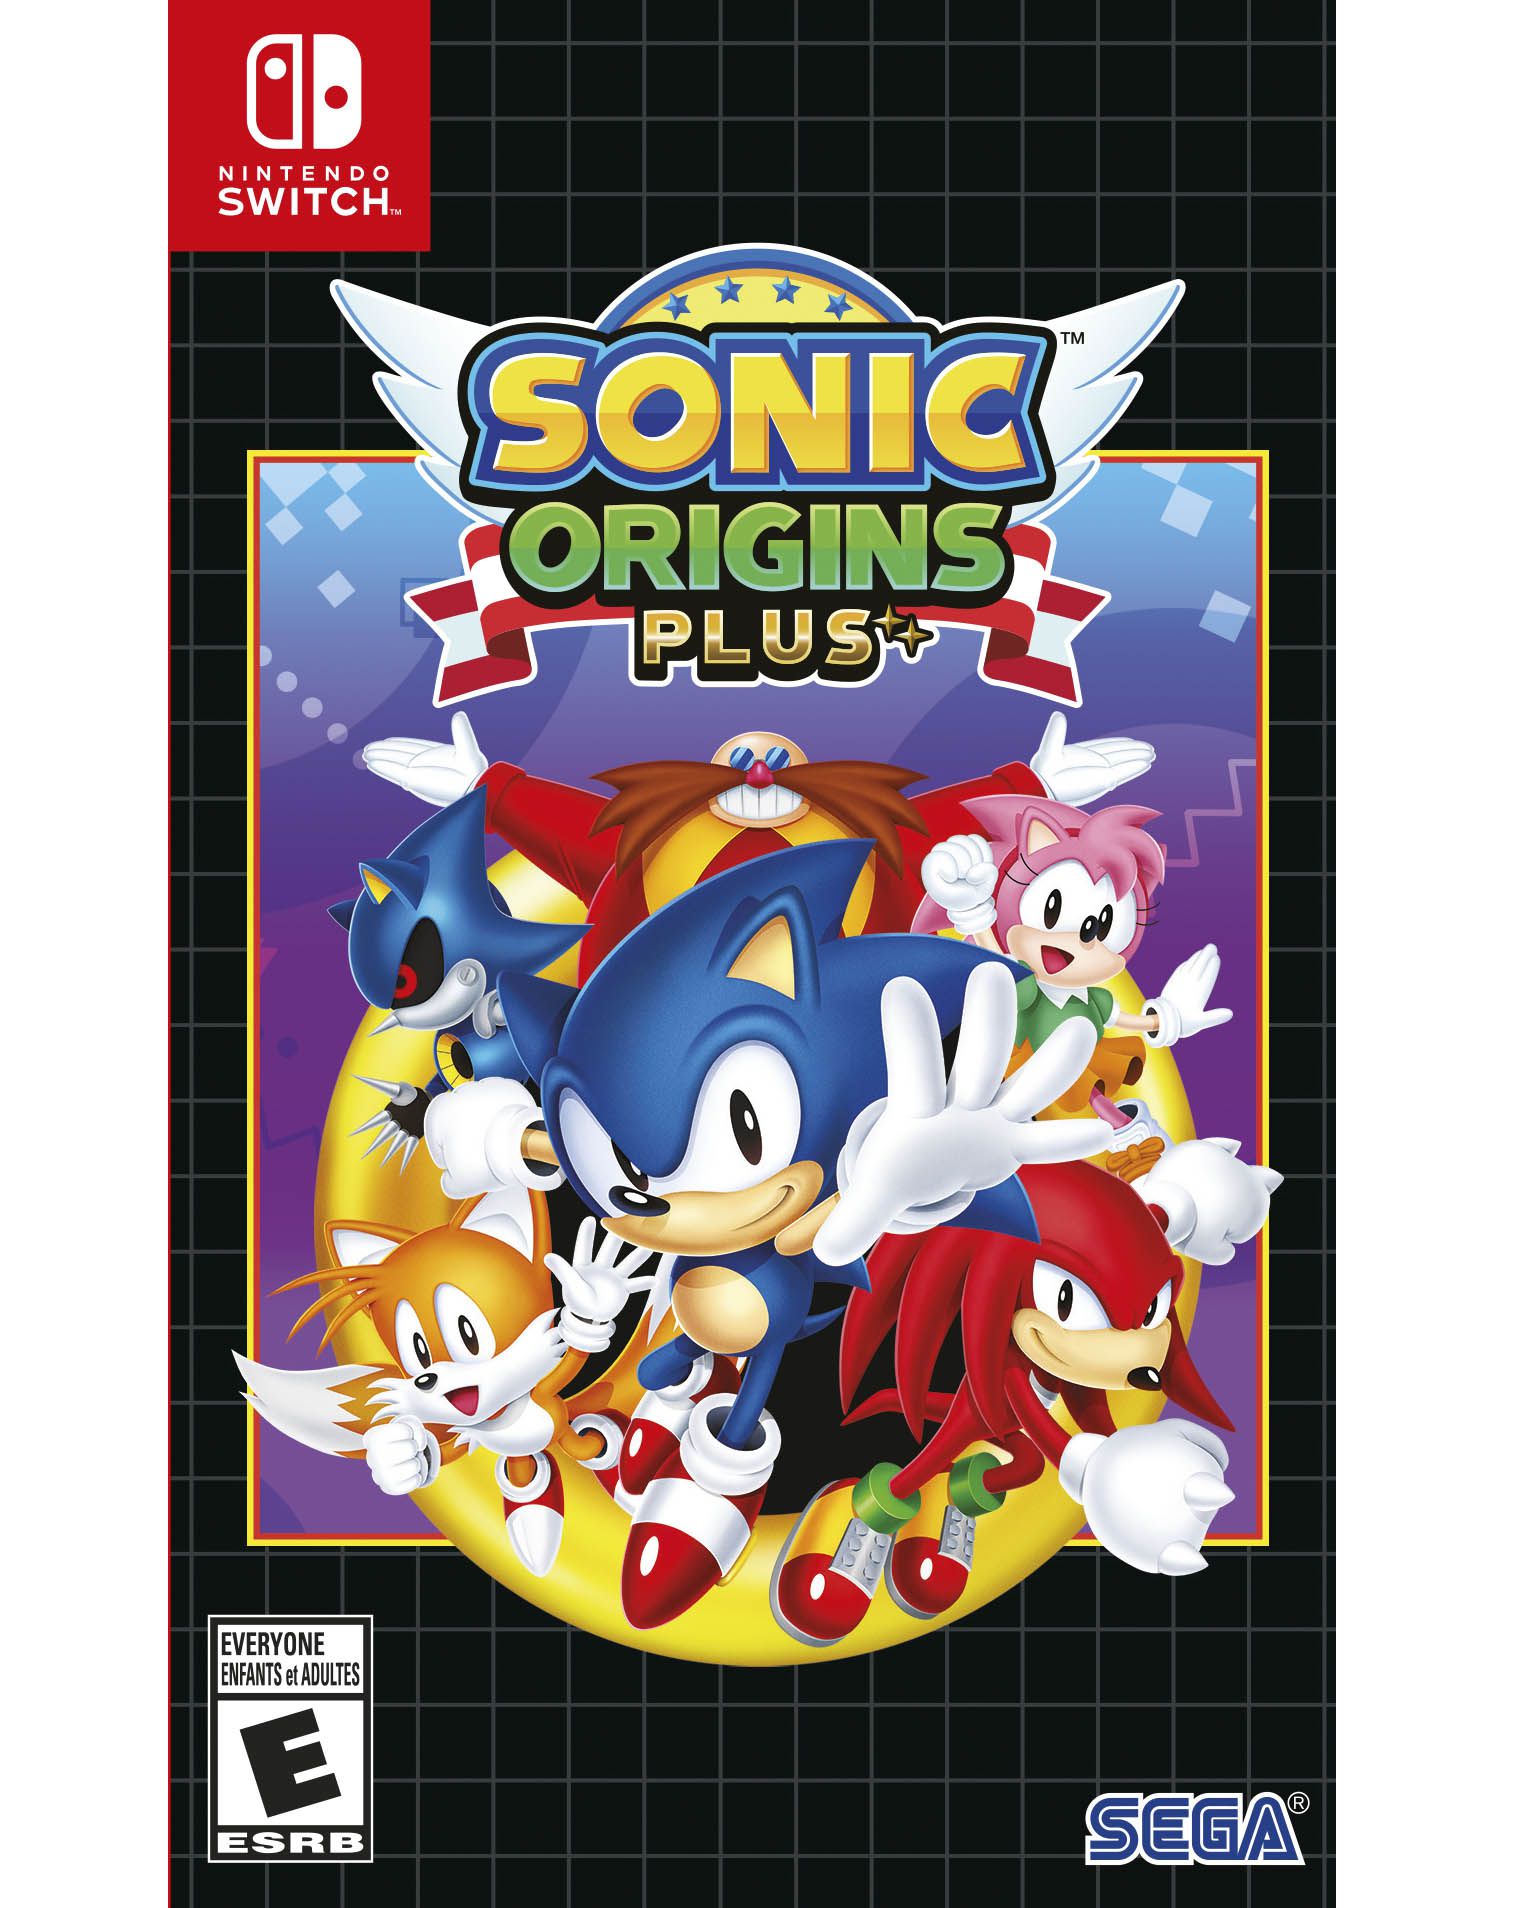 PSX Brasil] Sonic Colors: Ultimate, Sonic Origins e novo Sonic são